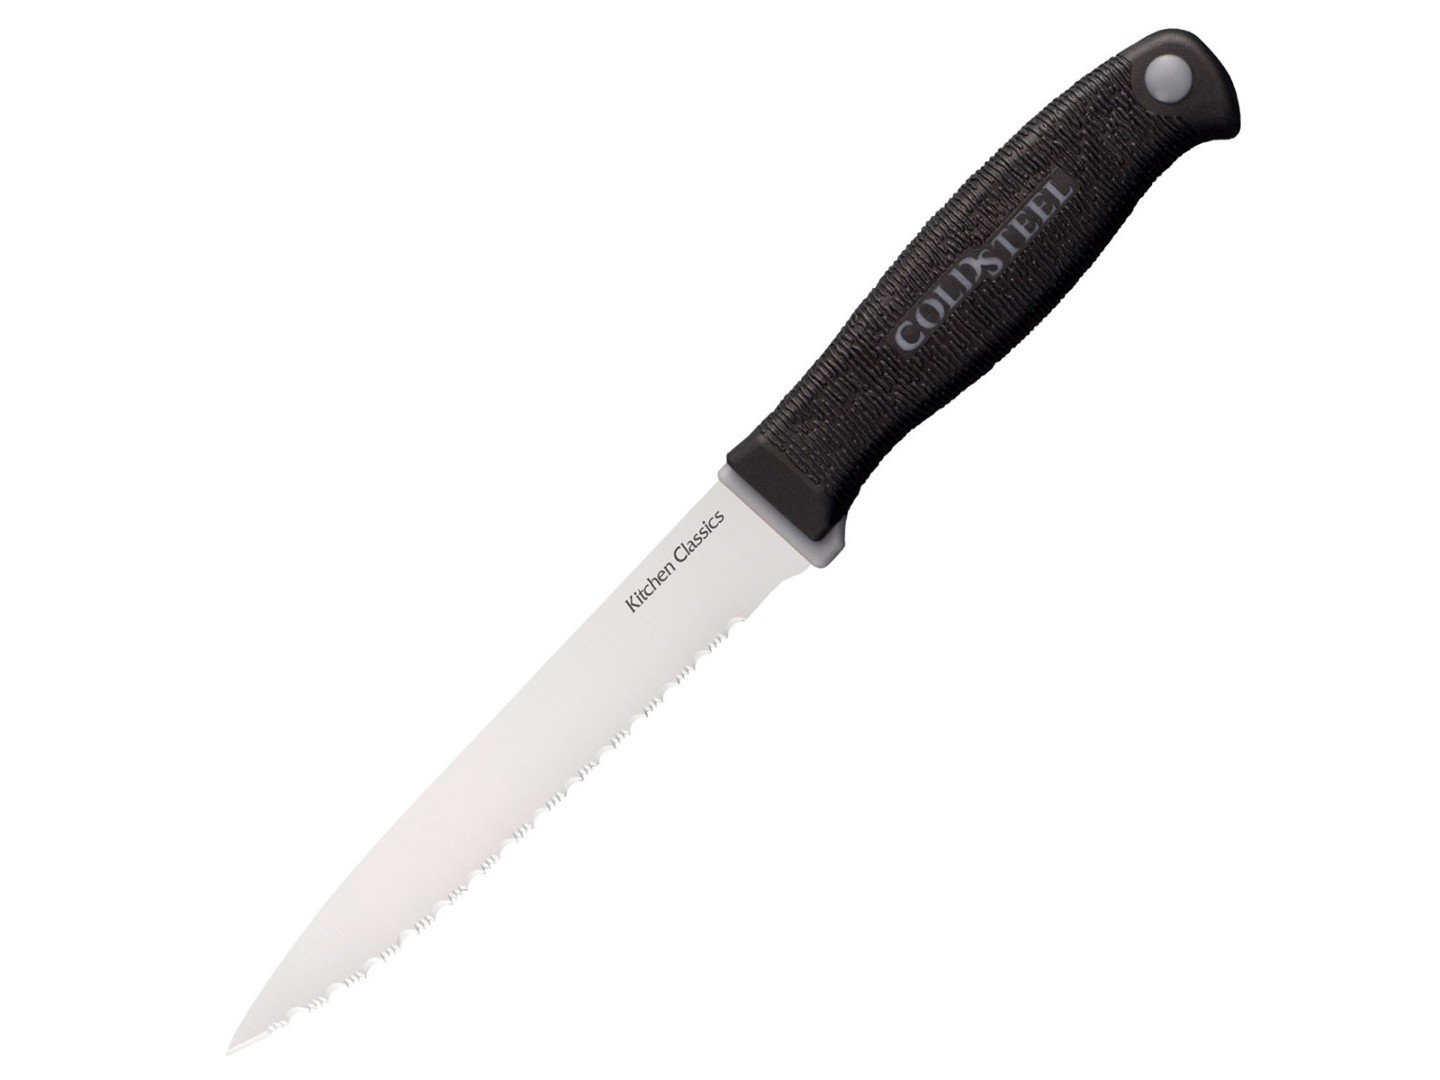 Кухонный нож с серрейтором Cold Steel Steak Knife (Kitchen Classics) 59KSSZ сталь 1.4116 рукоять Kray-Ex